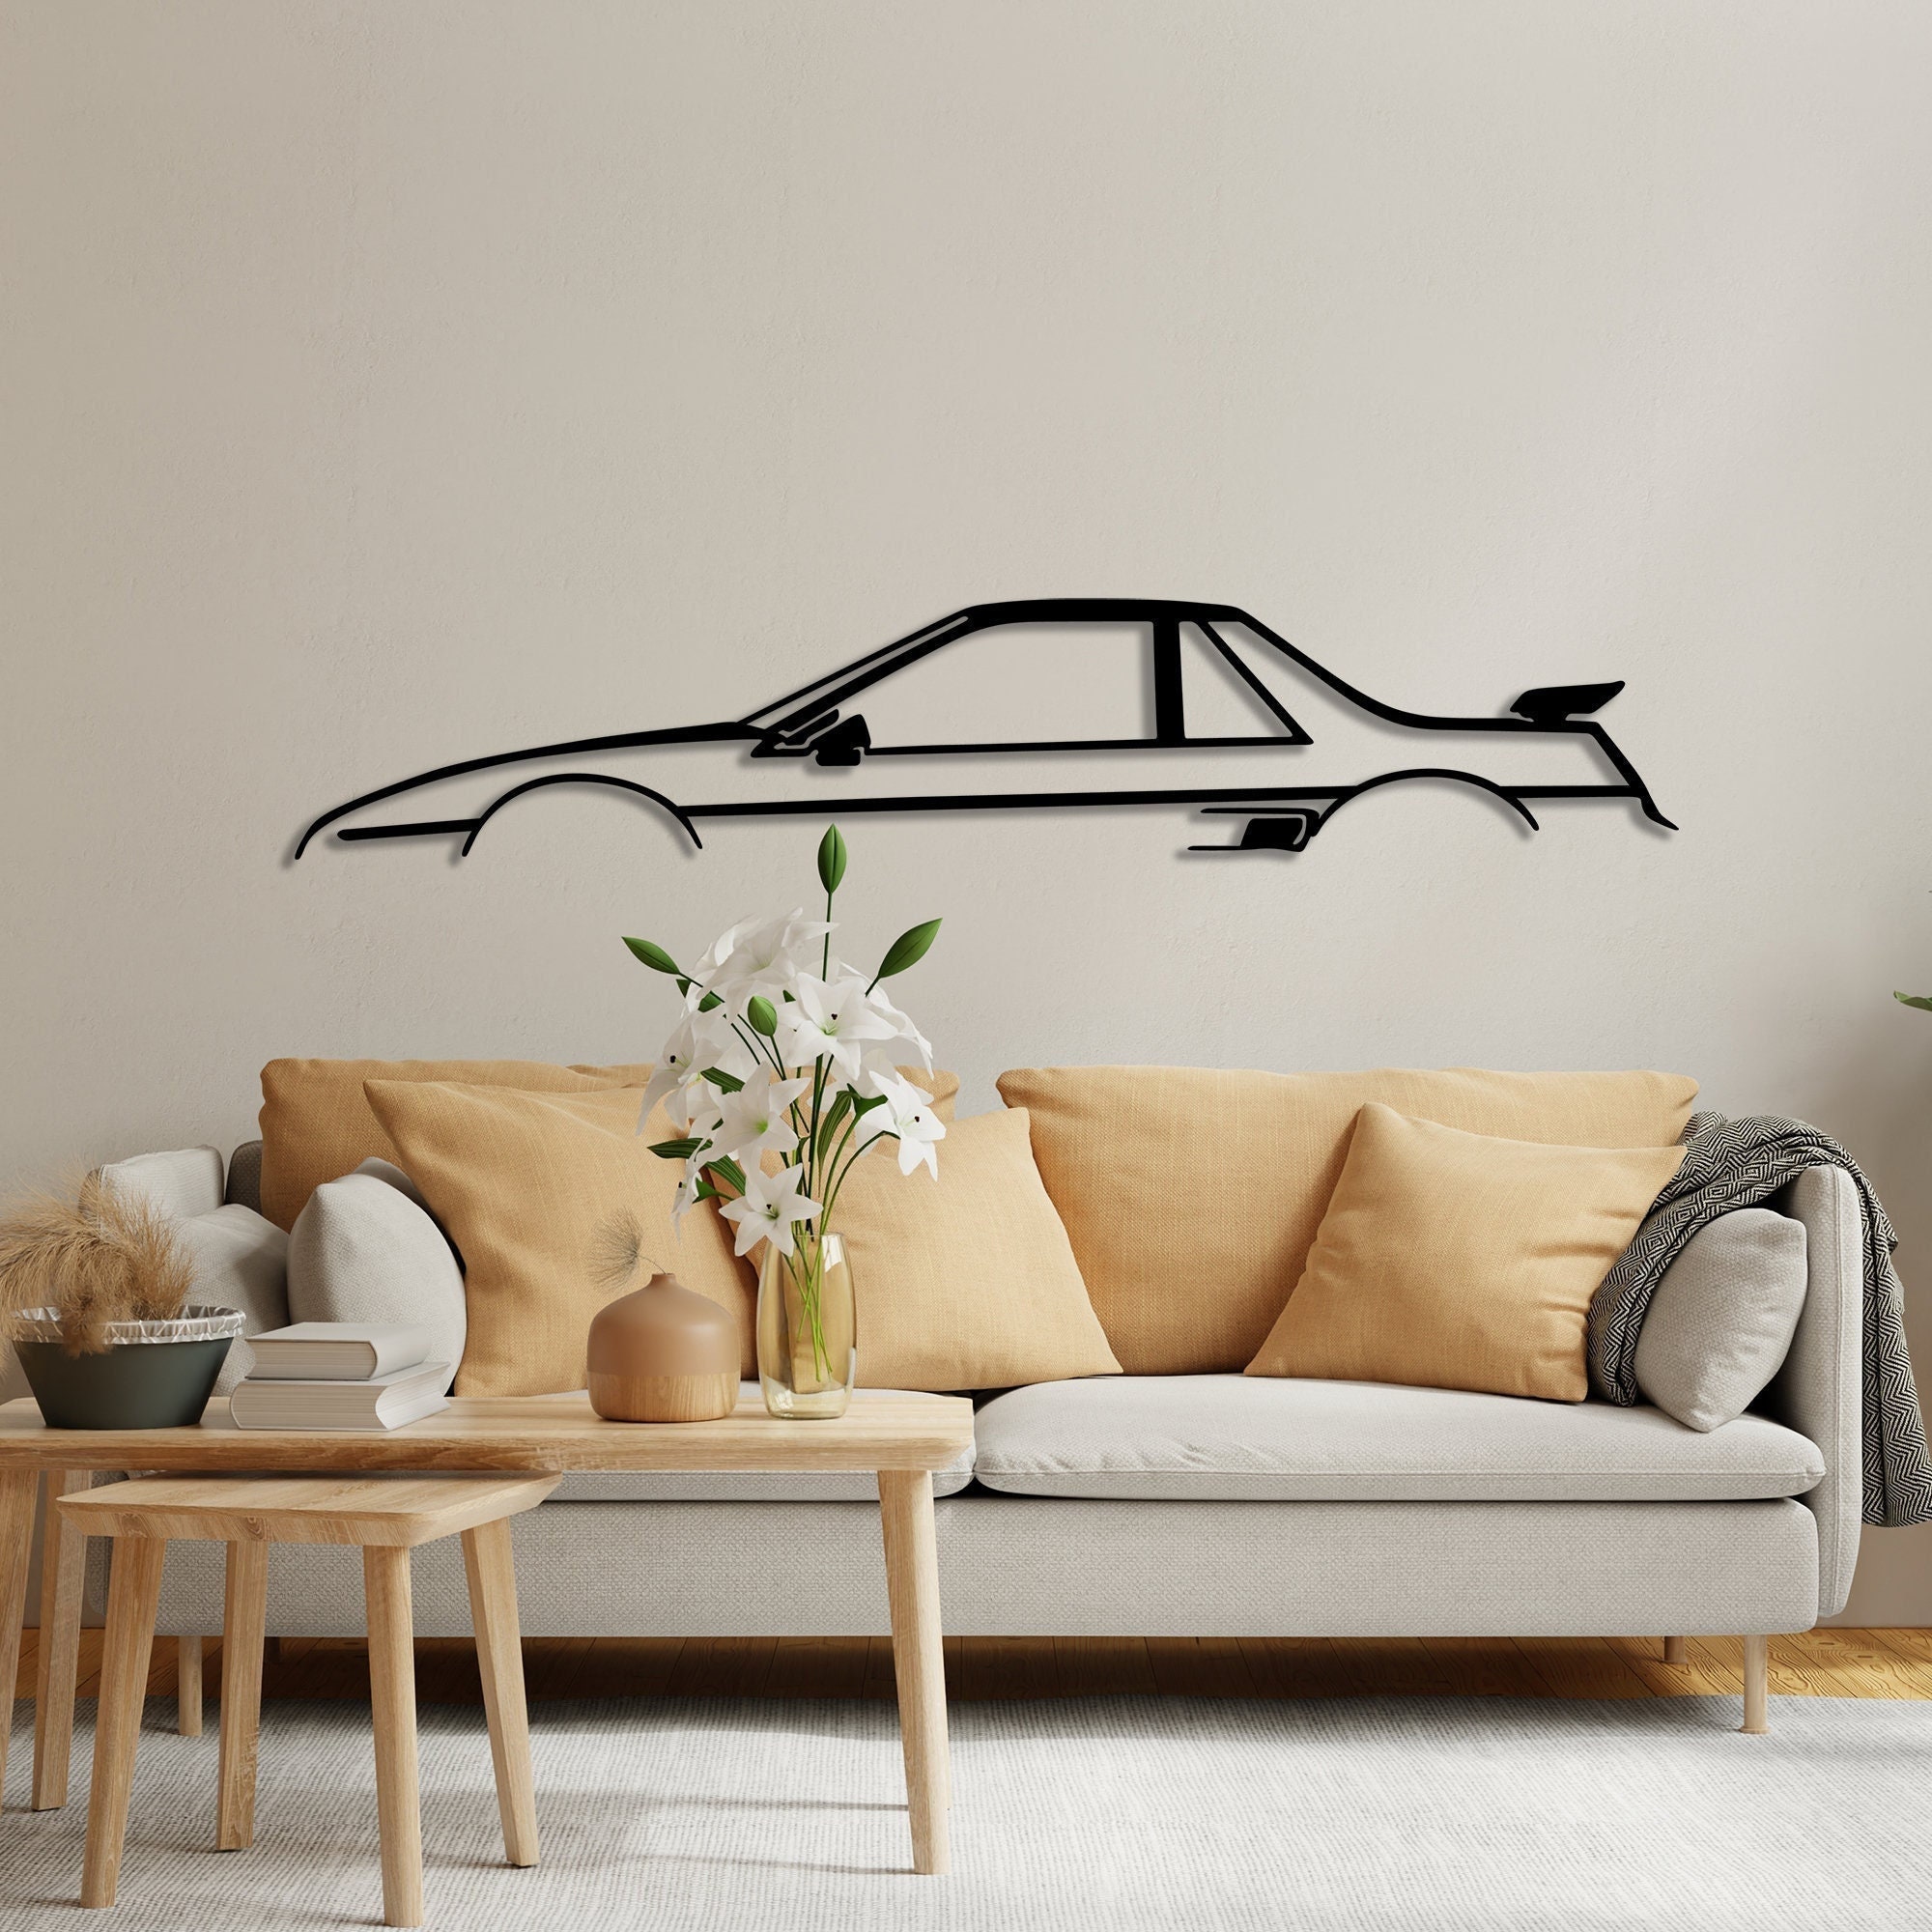 Pontiac fiero silhouette for sale  